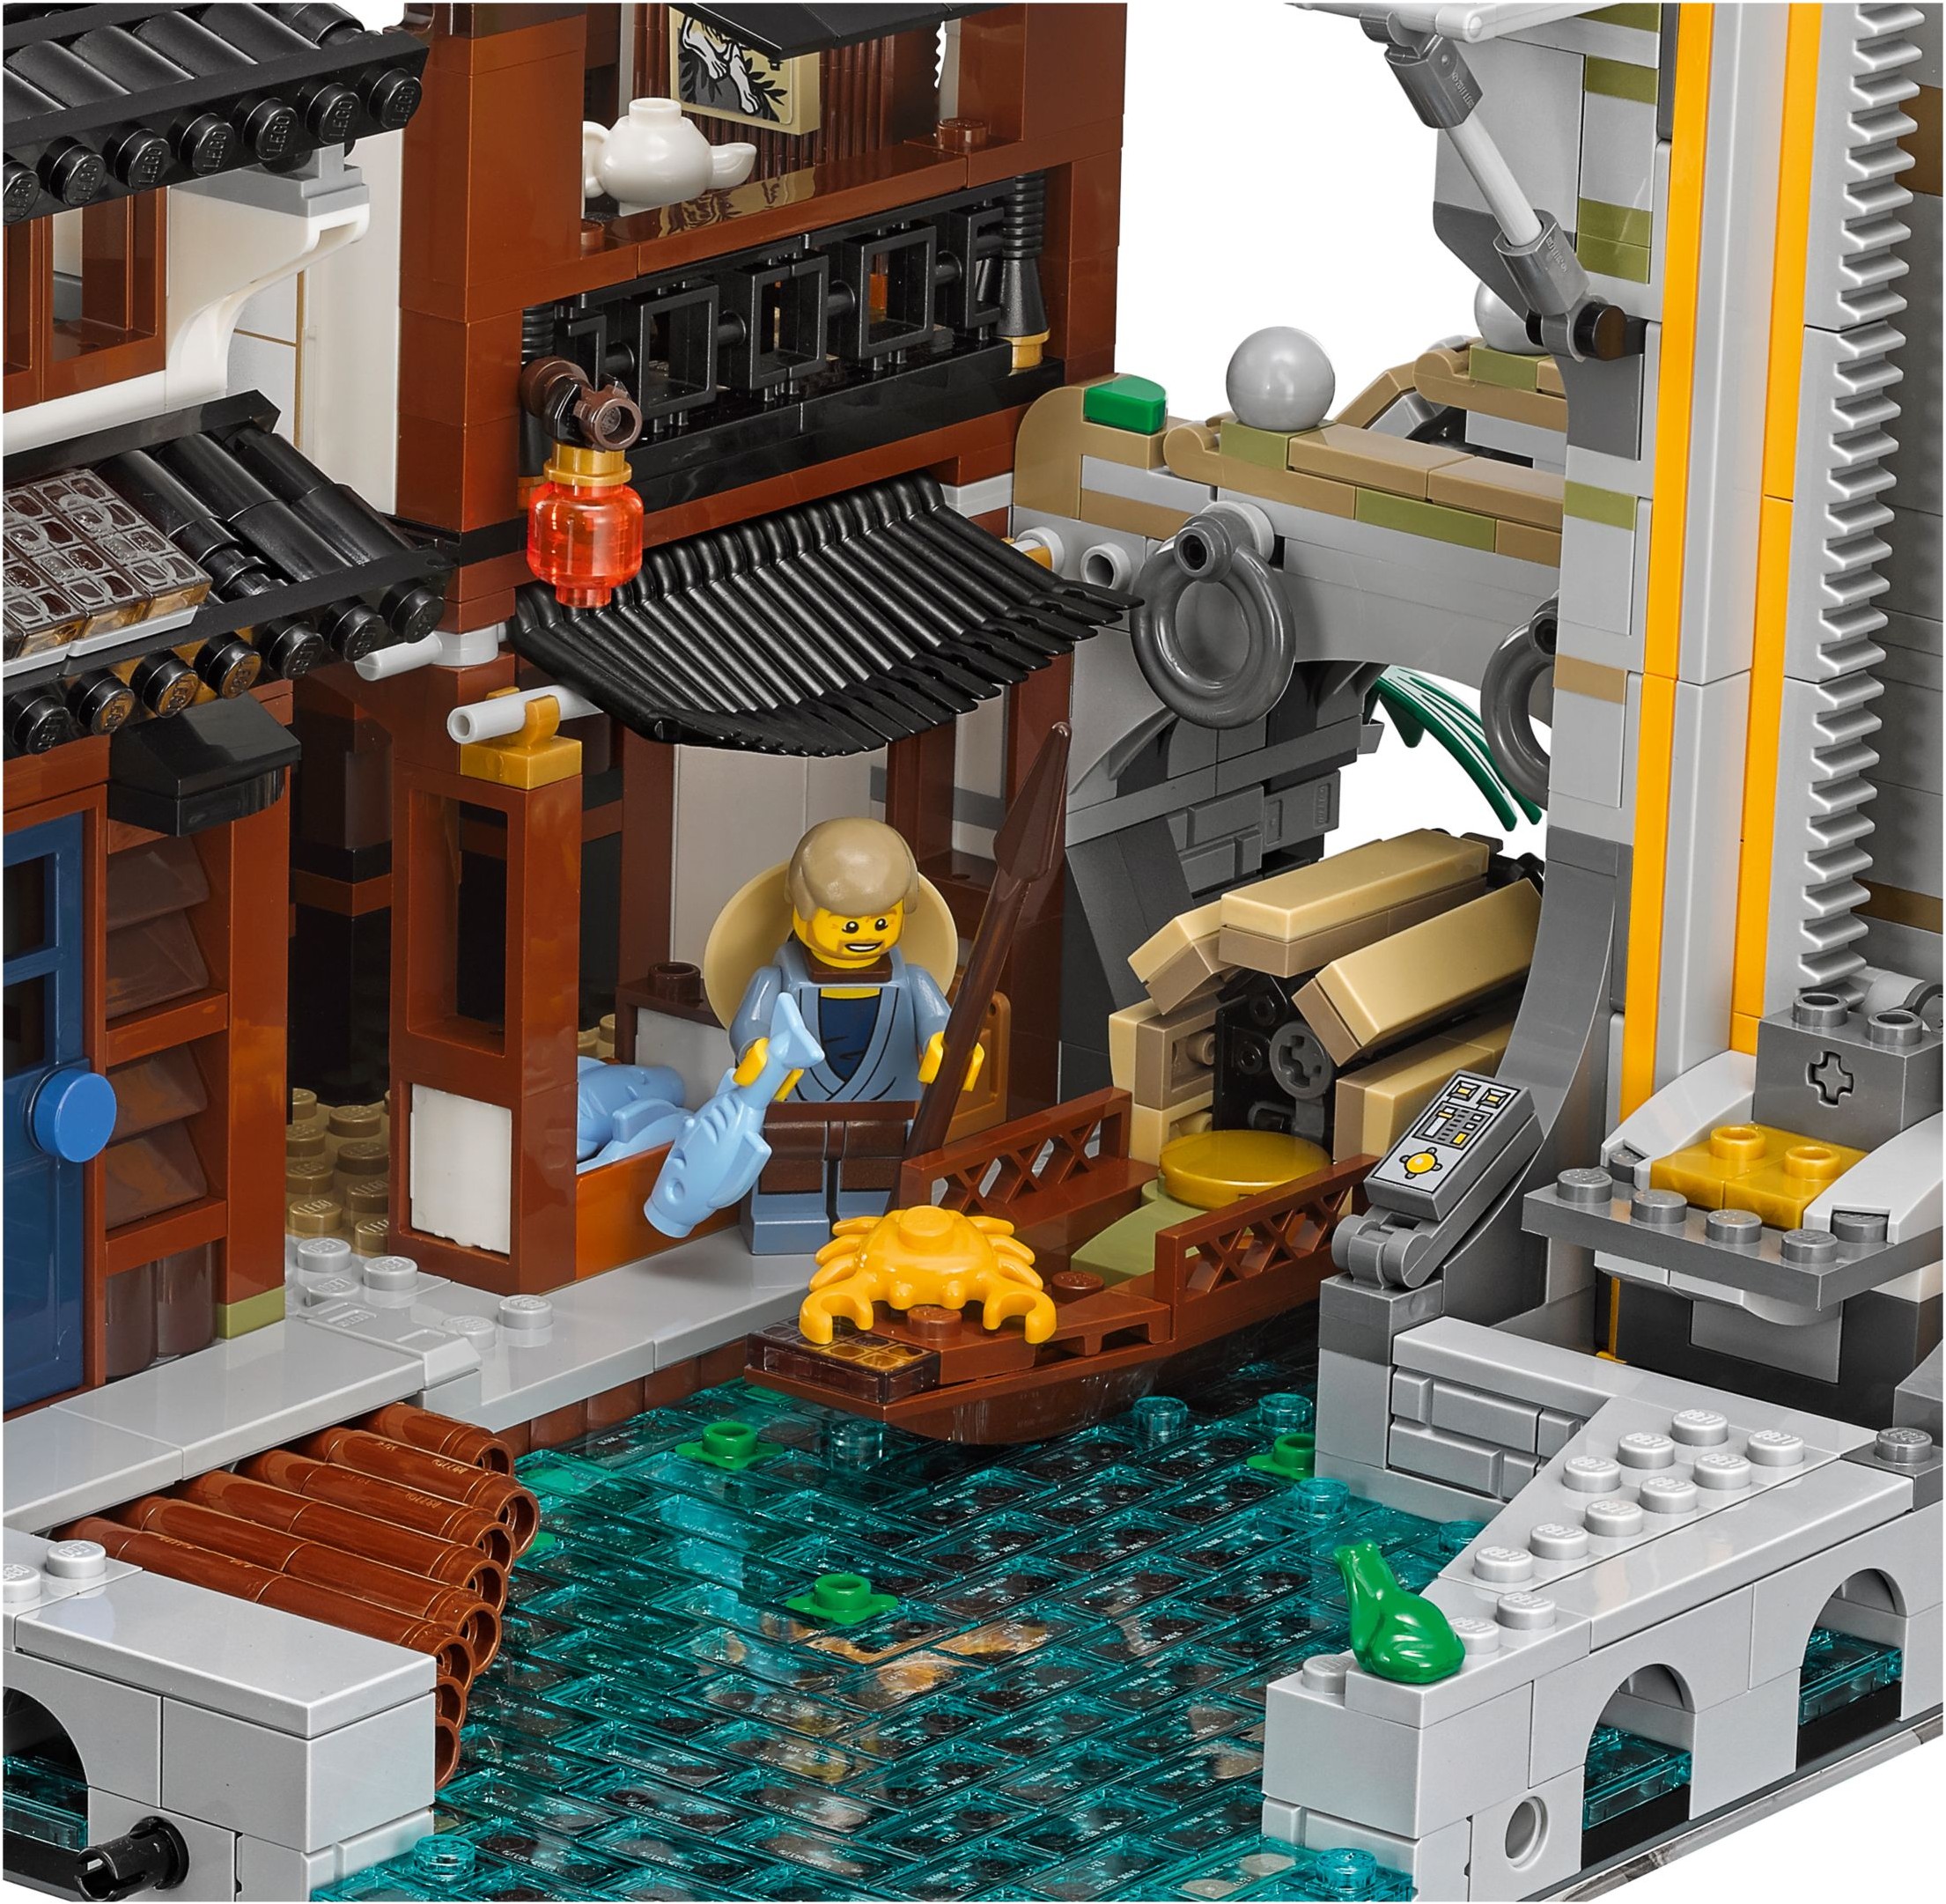 Lego City - Lego Ninjago set for best price